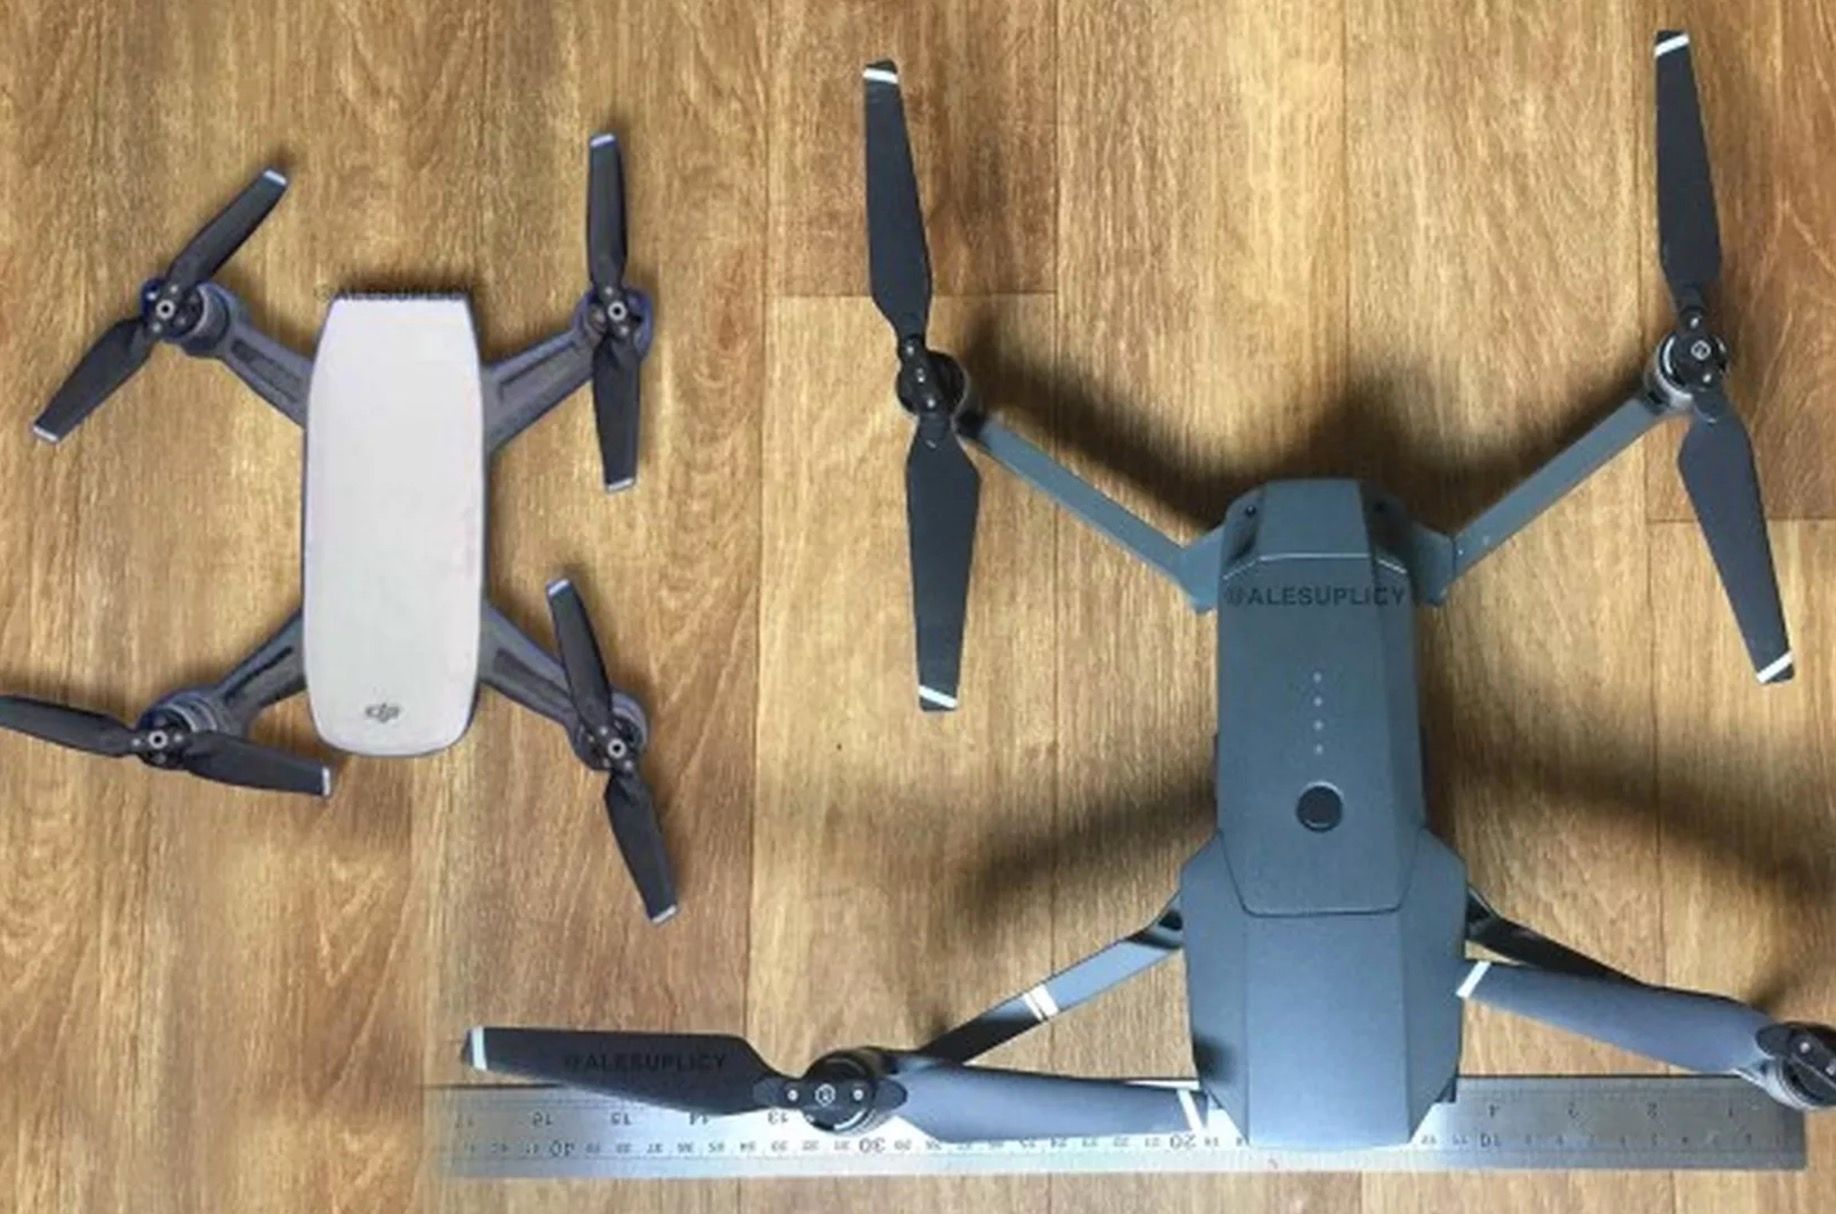 dji s next drone basically looks like a much smaller mavic pro leak reveals image 1